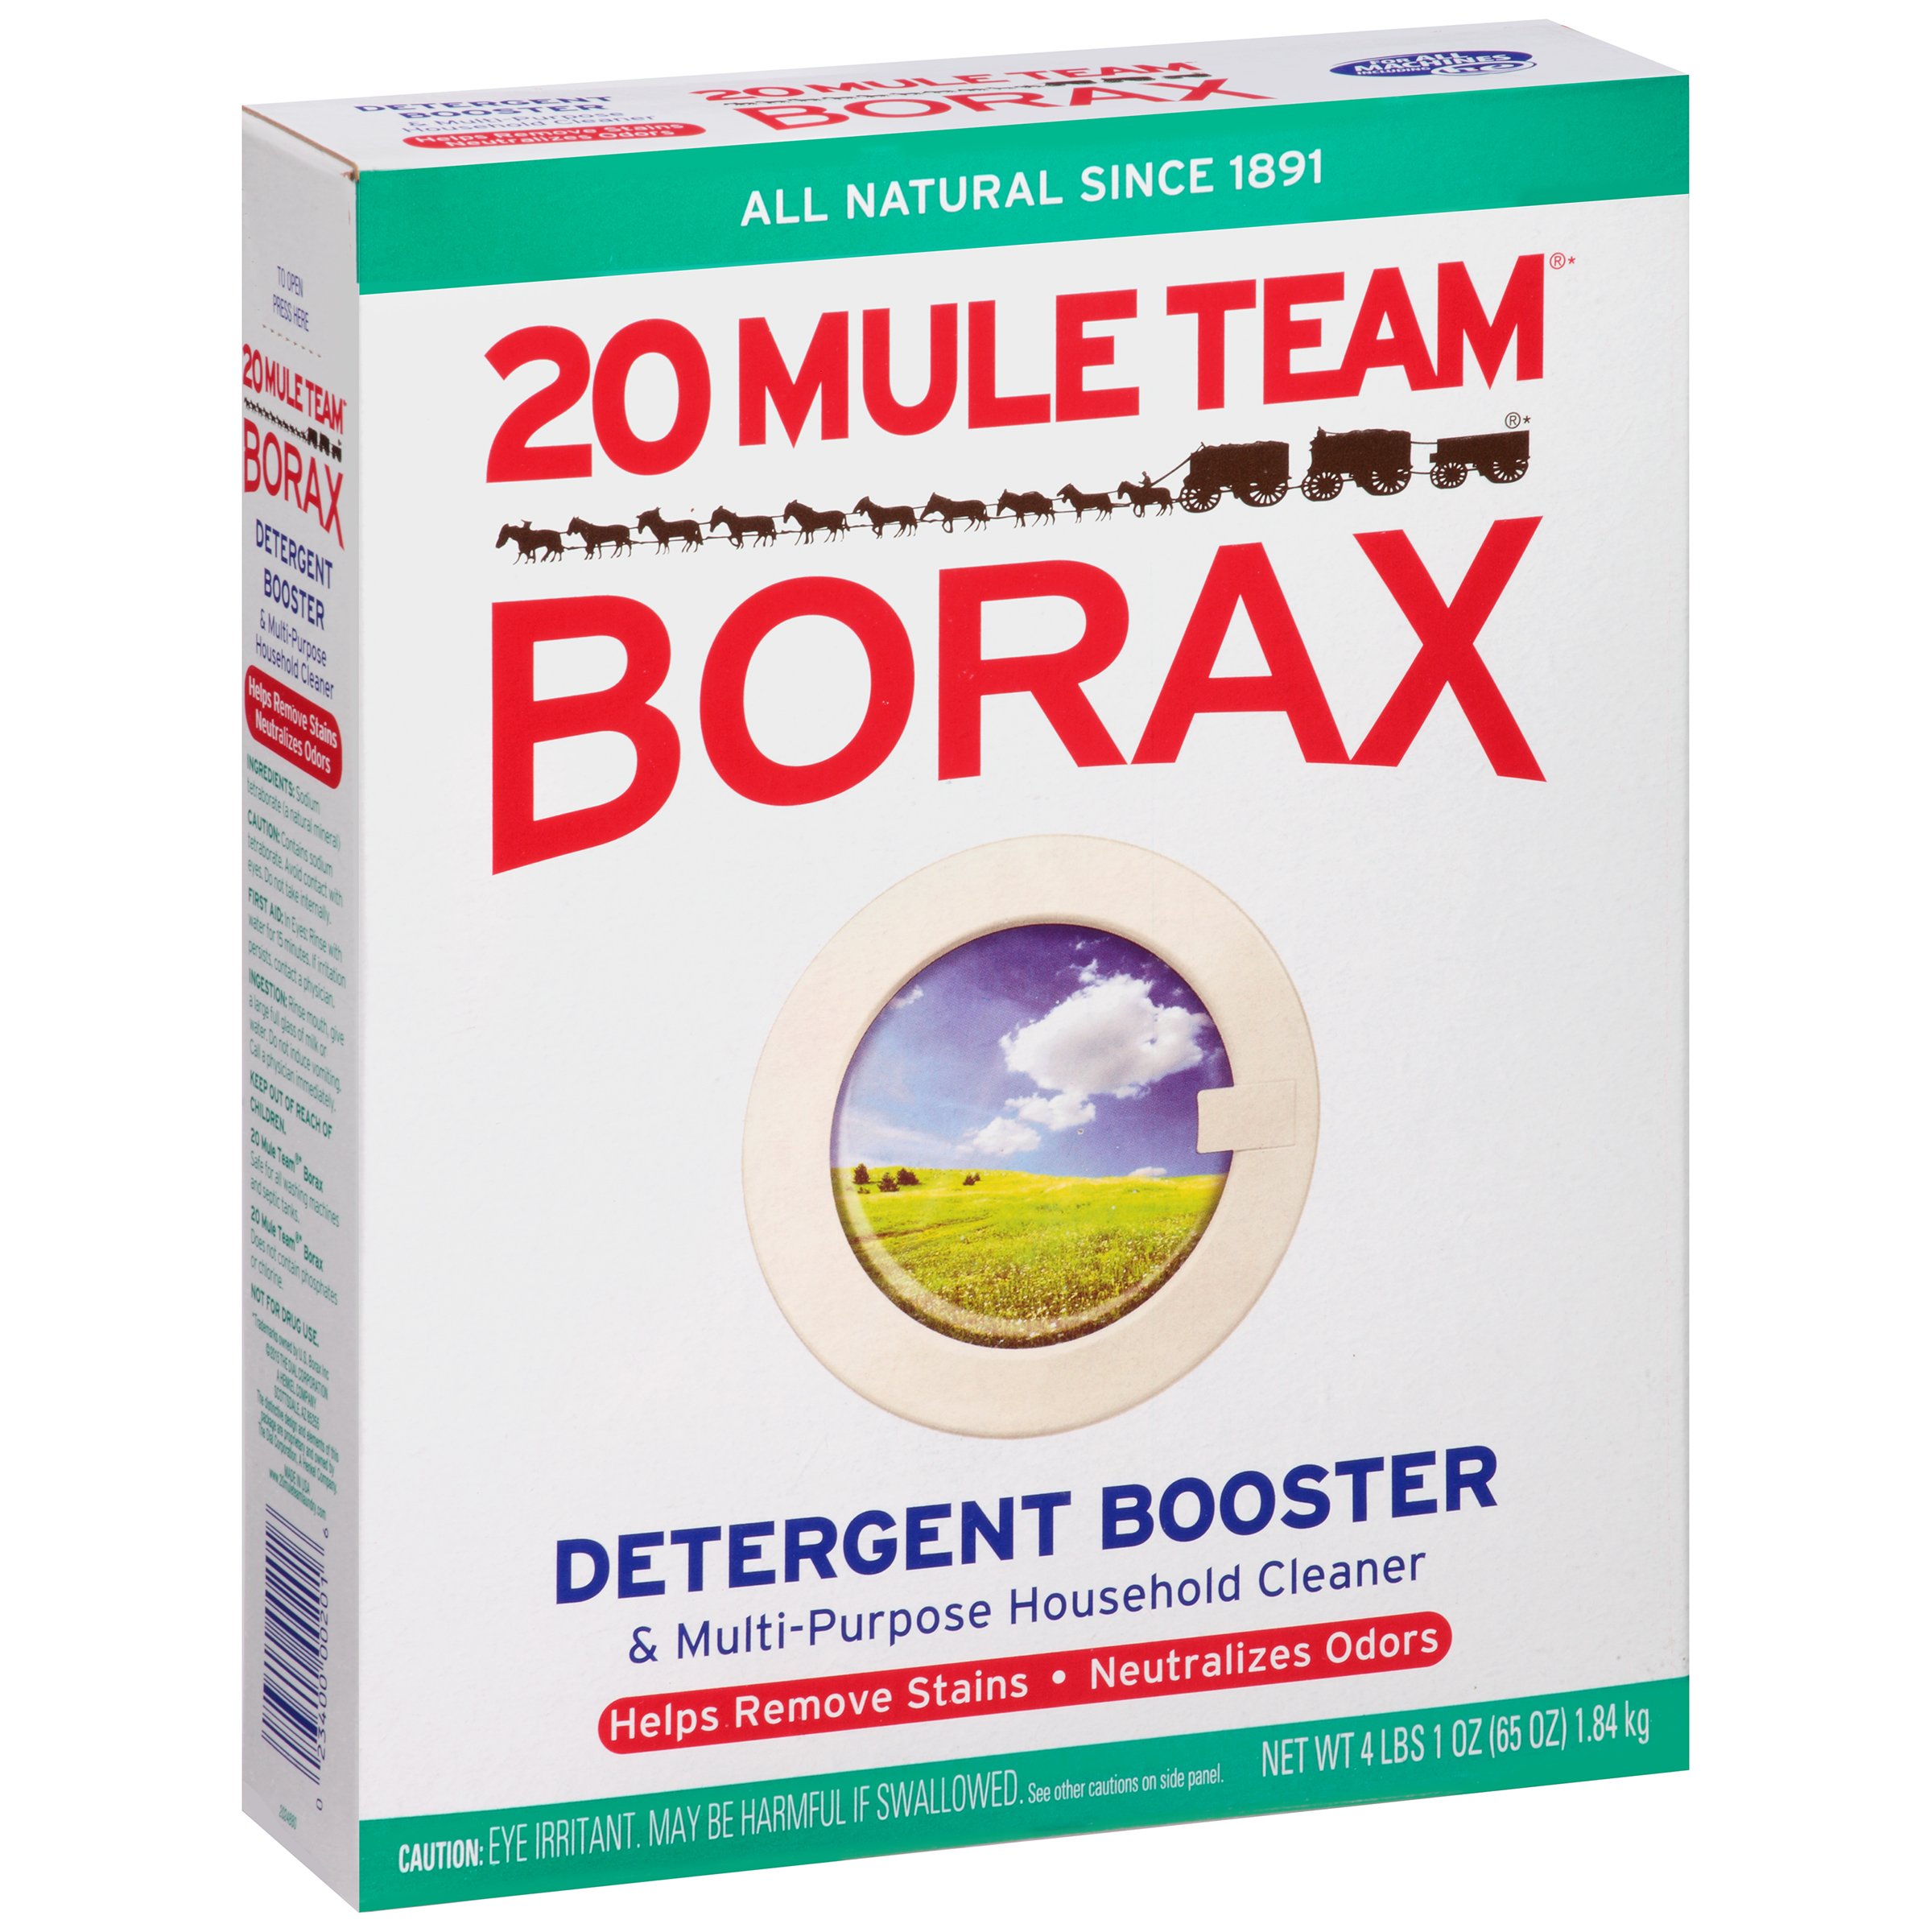 20 Mule Team Borax Detergent Booster & Multi-Purpose Cleaner